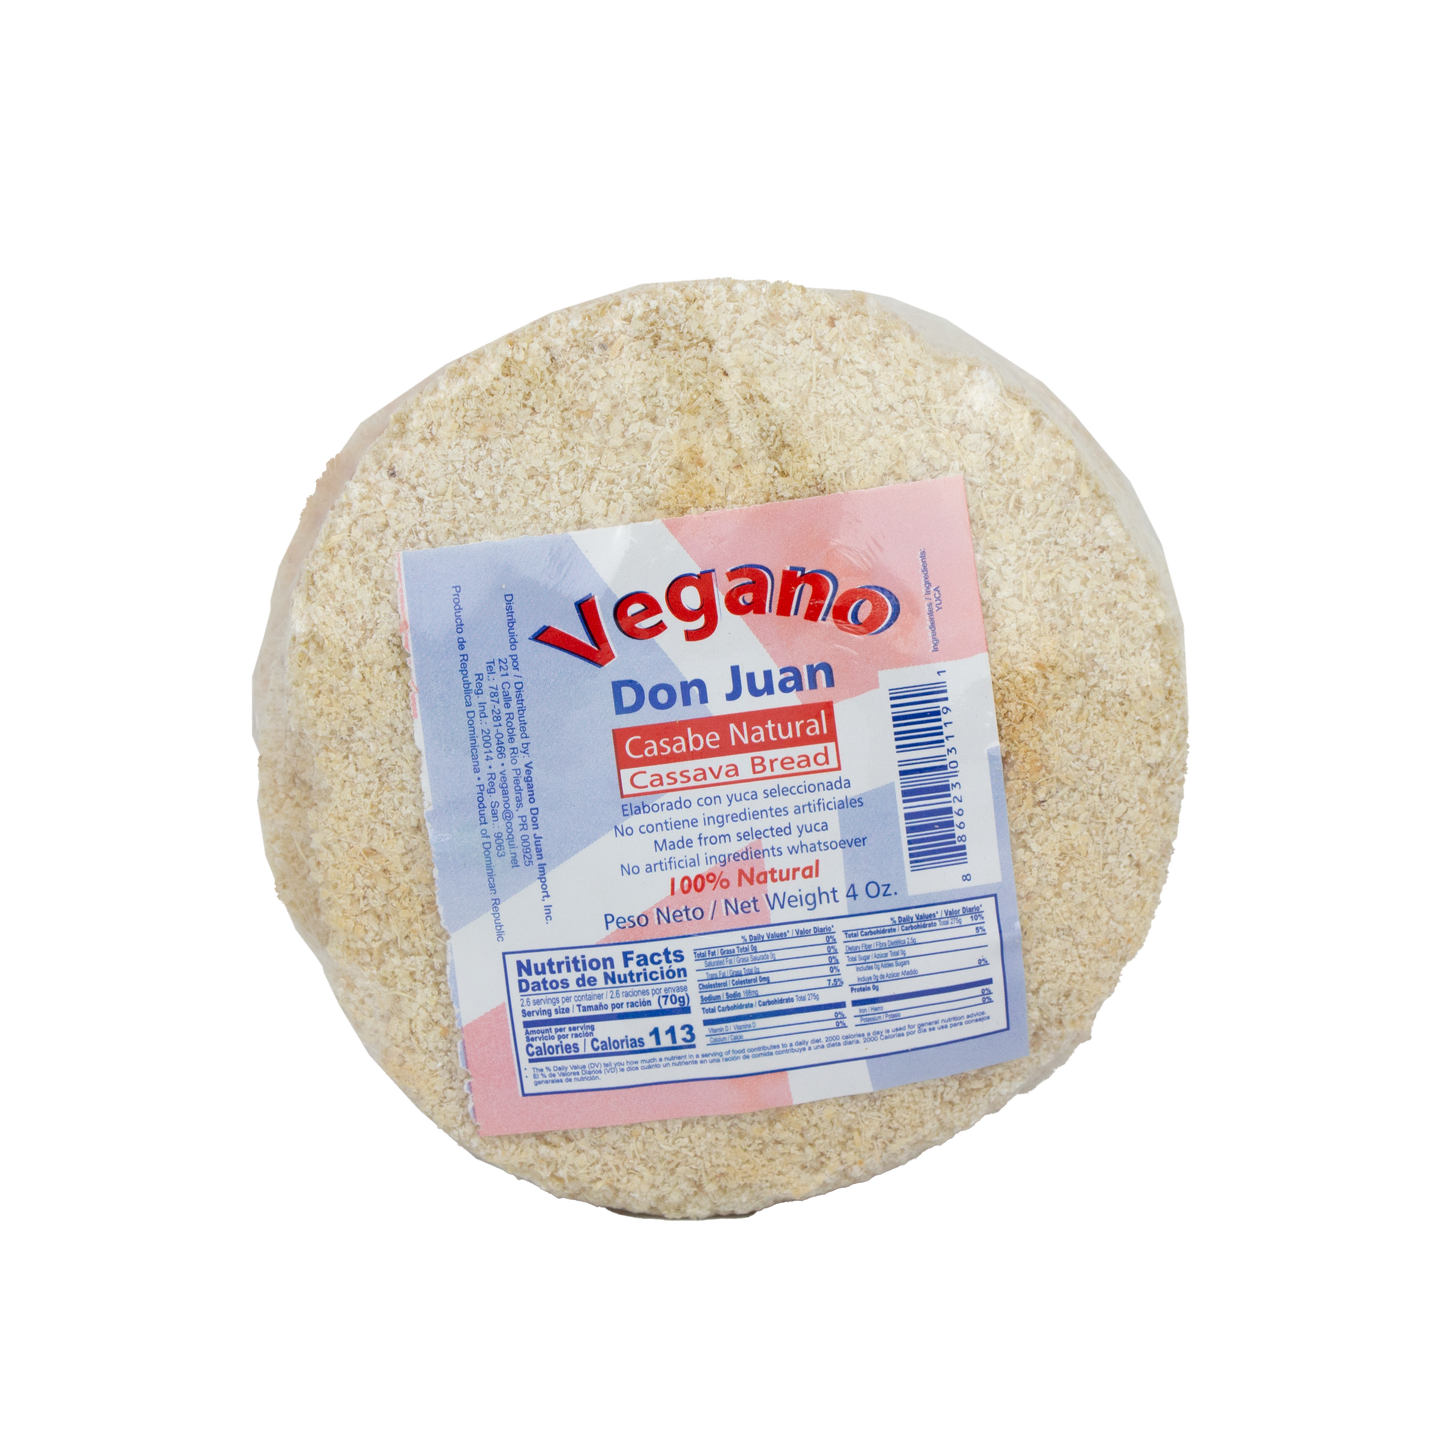 Vegano Don Juan - Casabe Natural (4.0 oz) (Store Pick-Up Only)